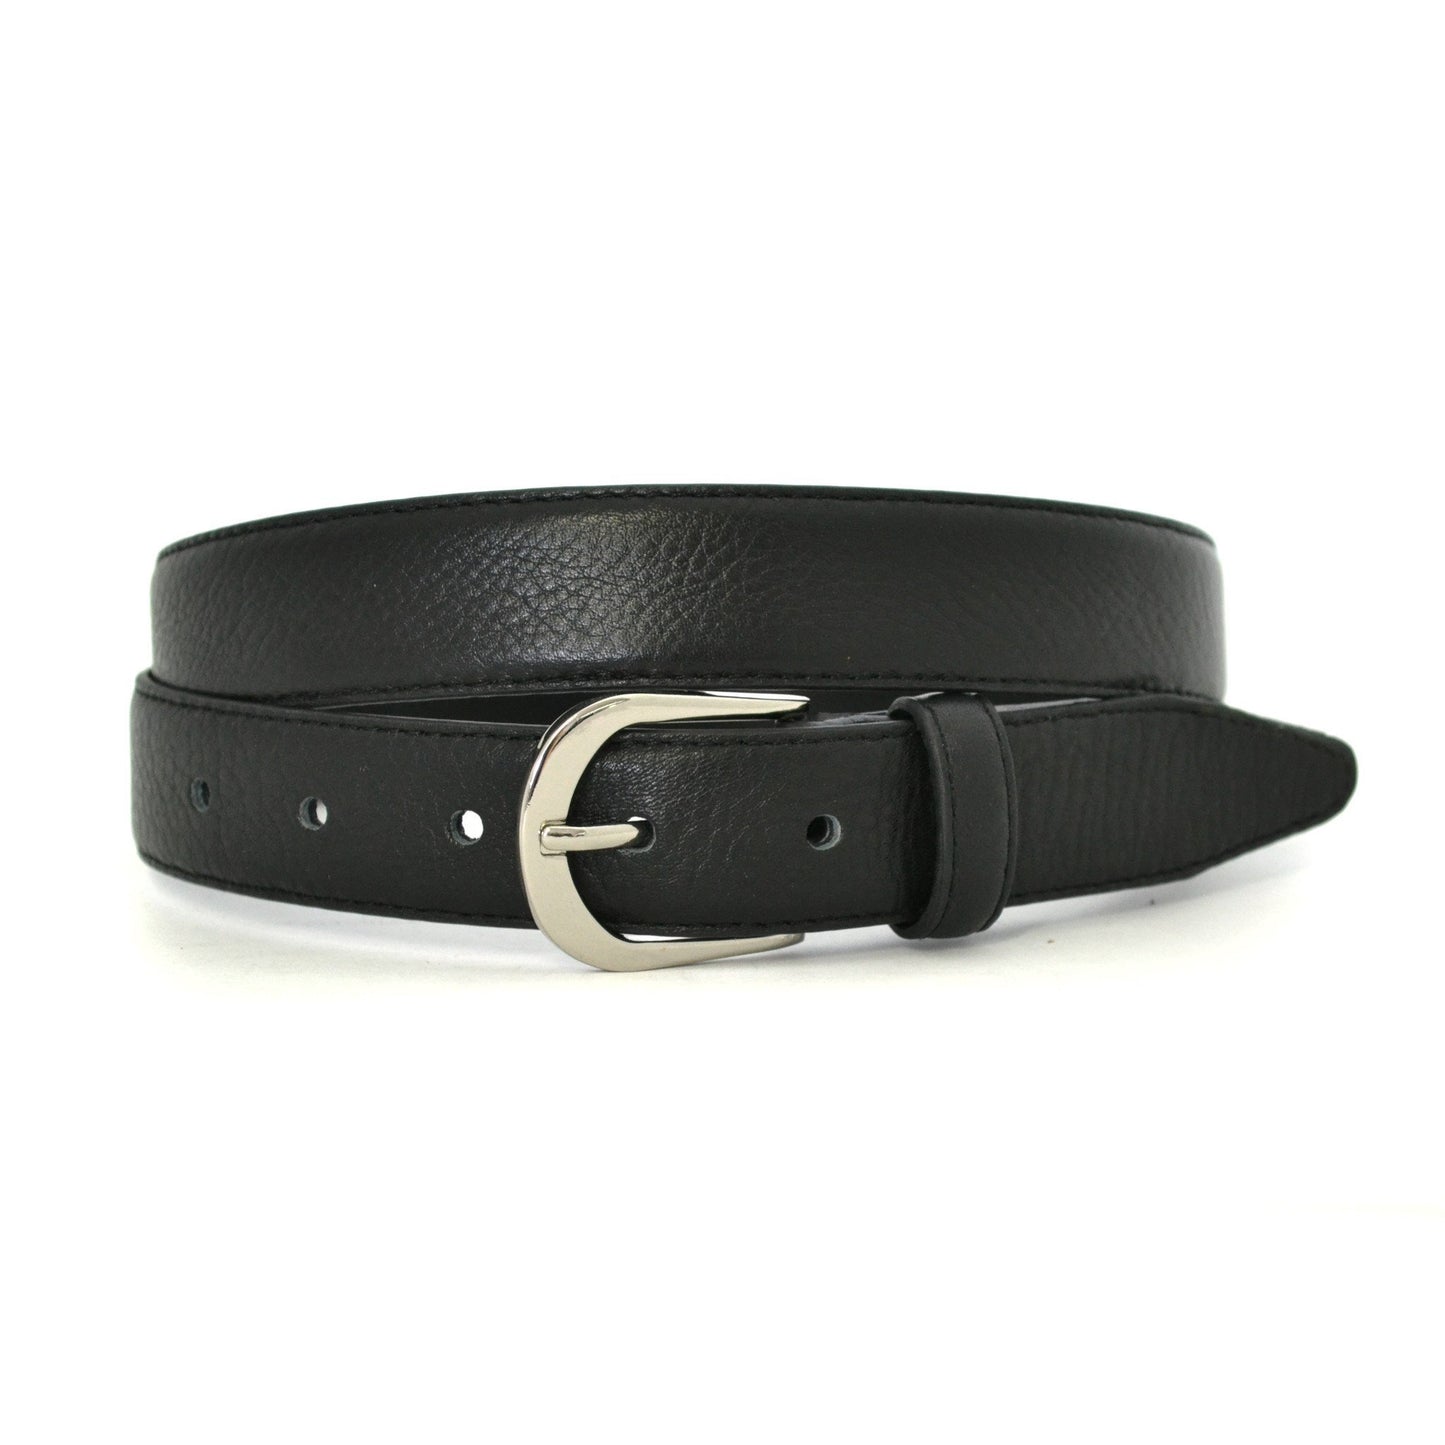 CARLOS - Mens Black Genuine Leather Belt – The Fitting Belt Company